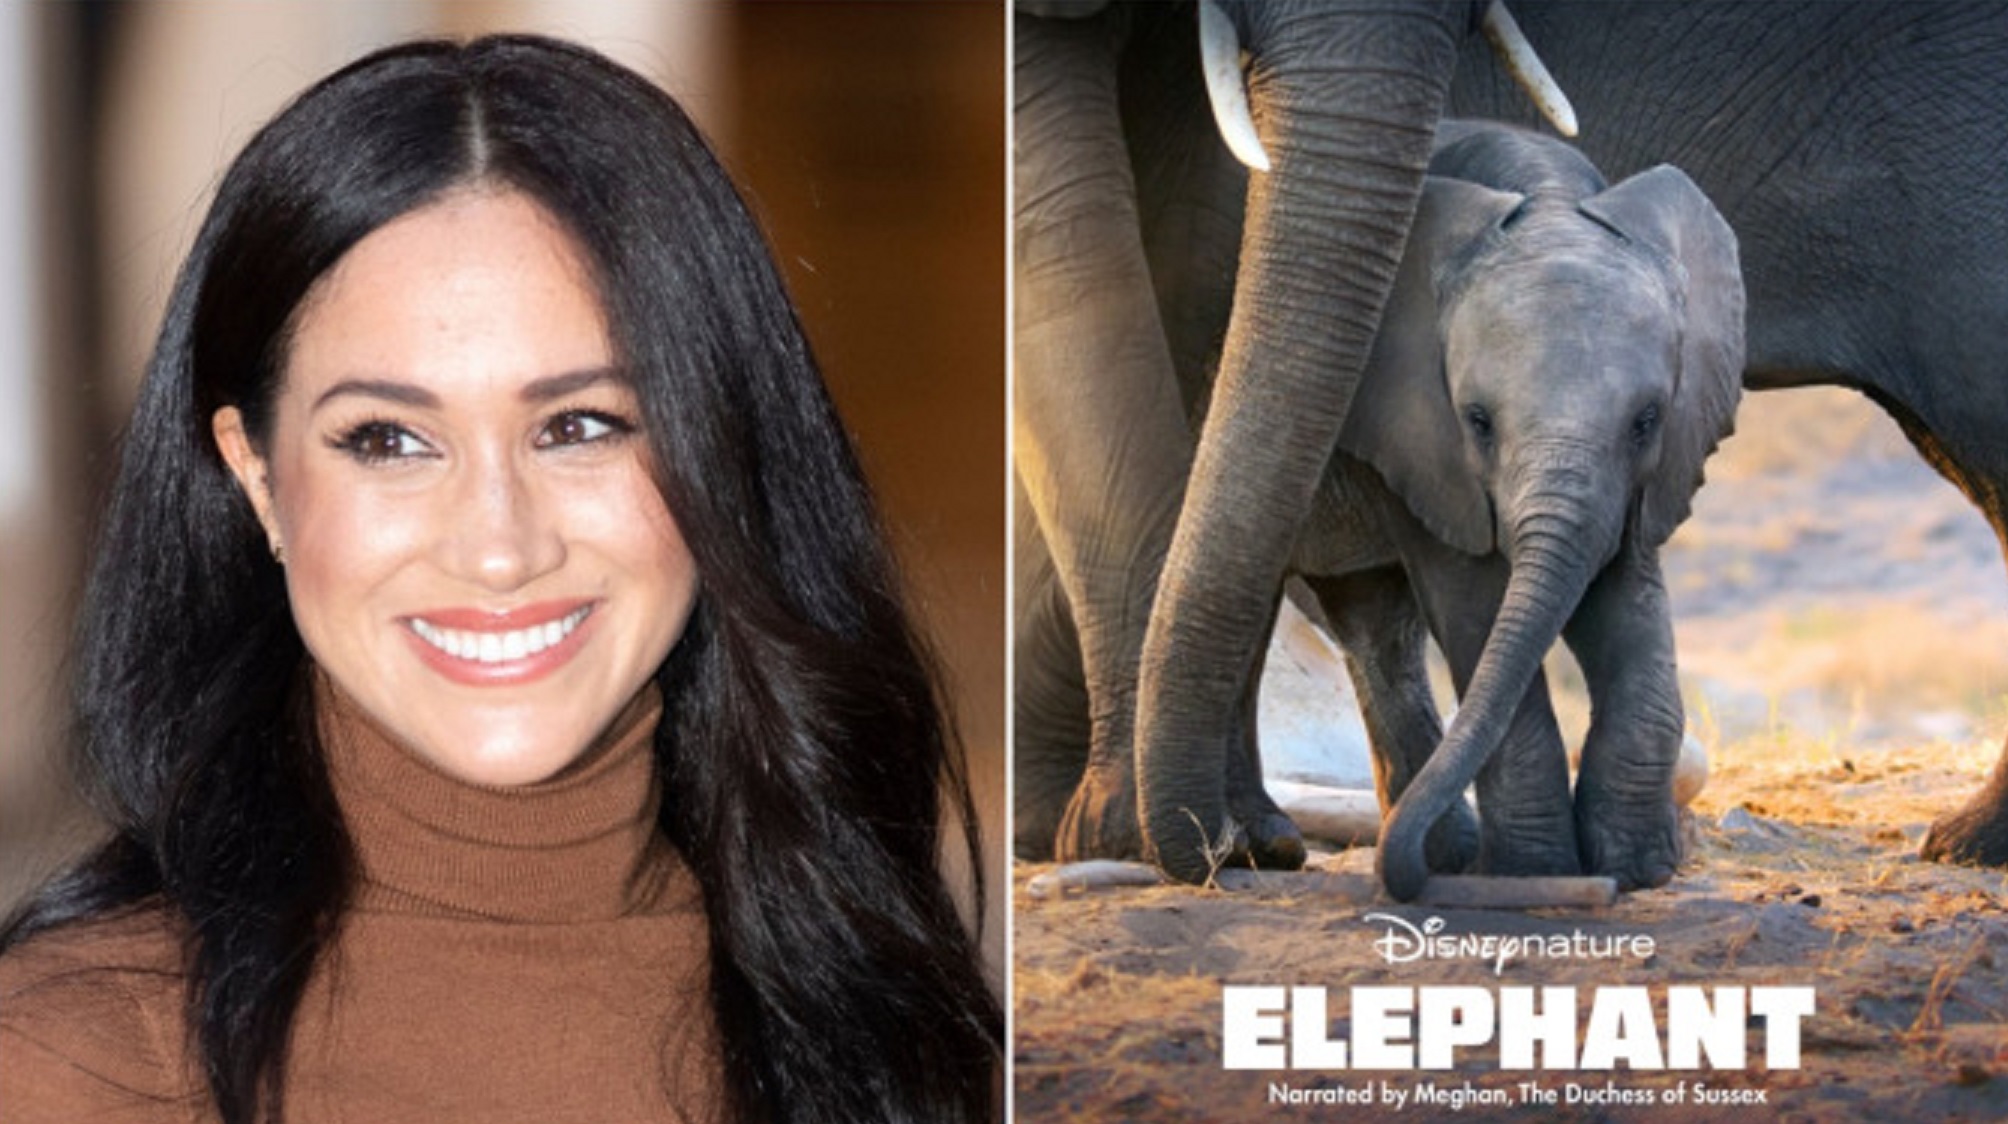 Meghan Markle Lends Her Voice for Disney Nature’s Elephant